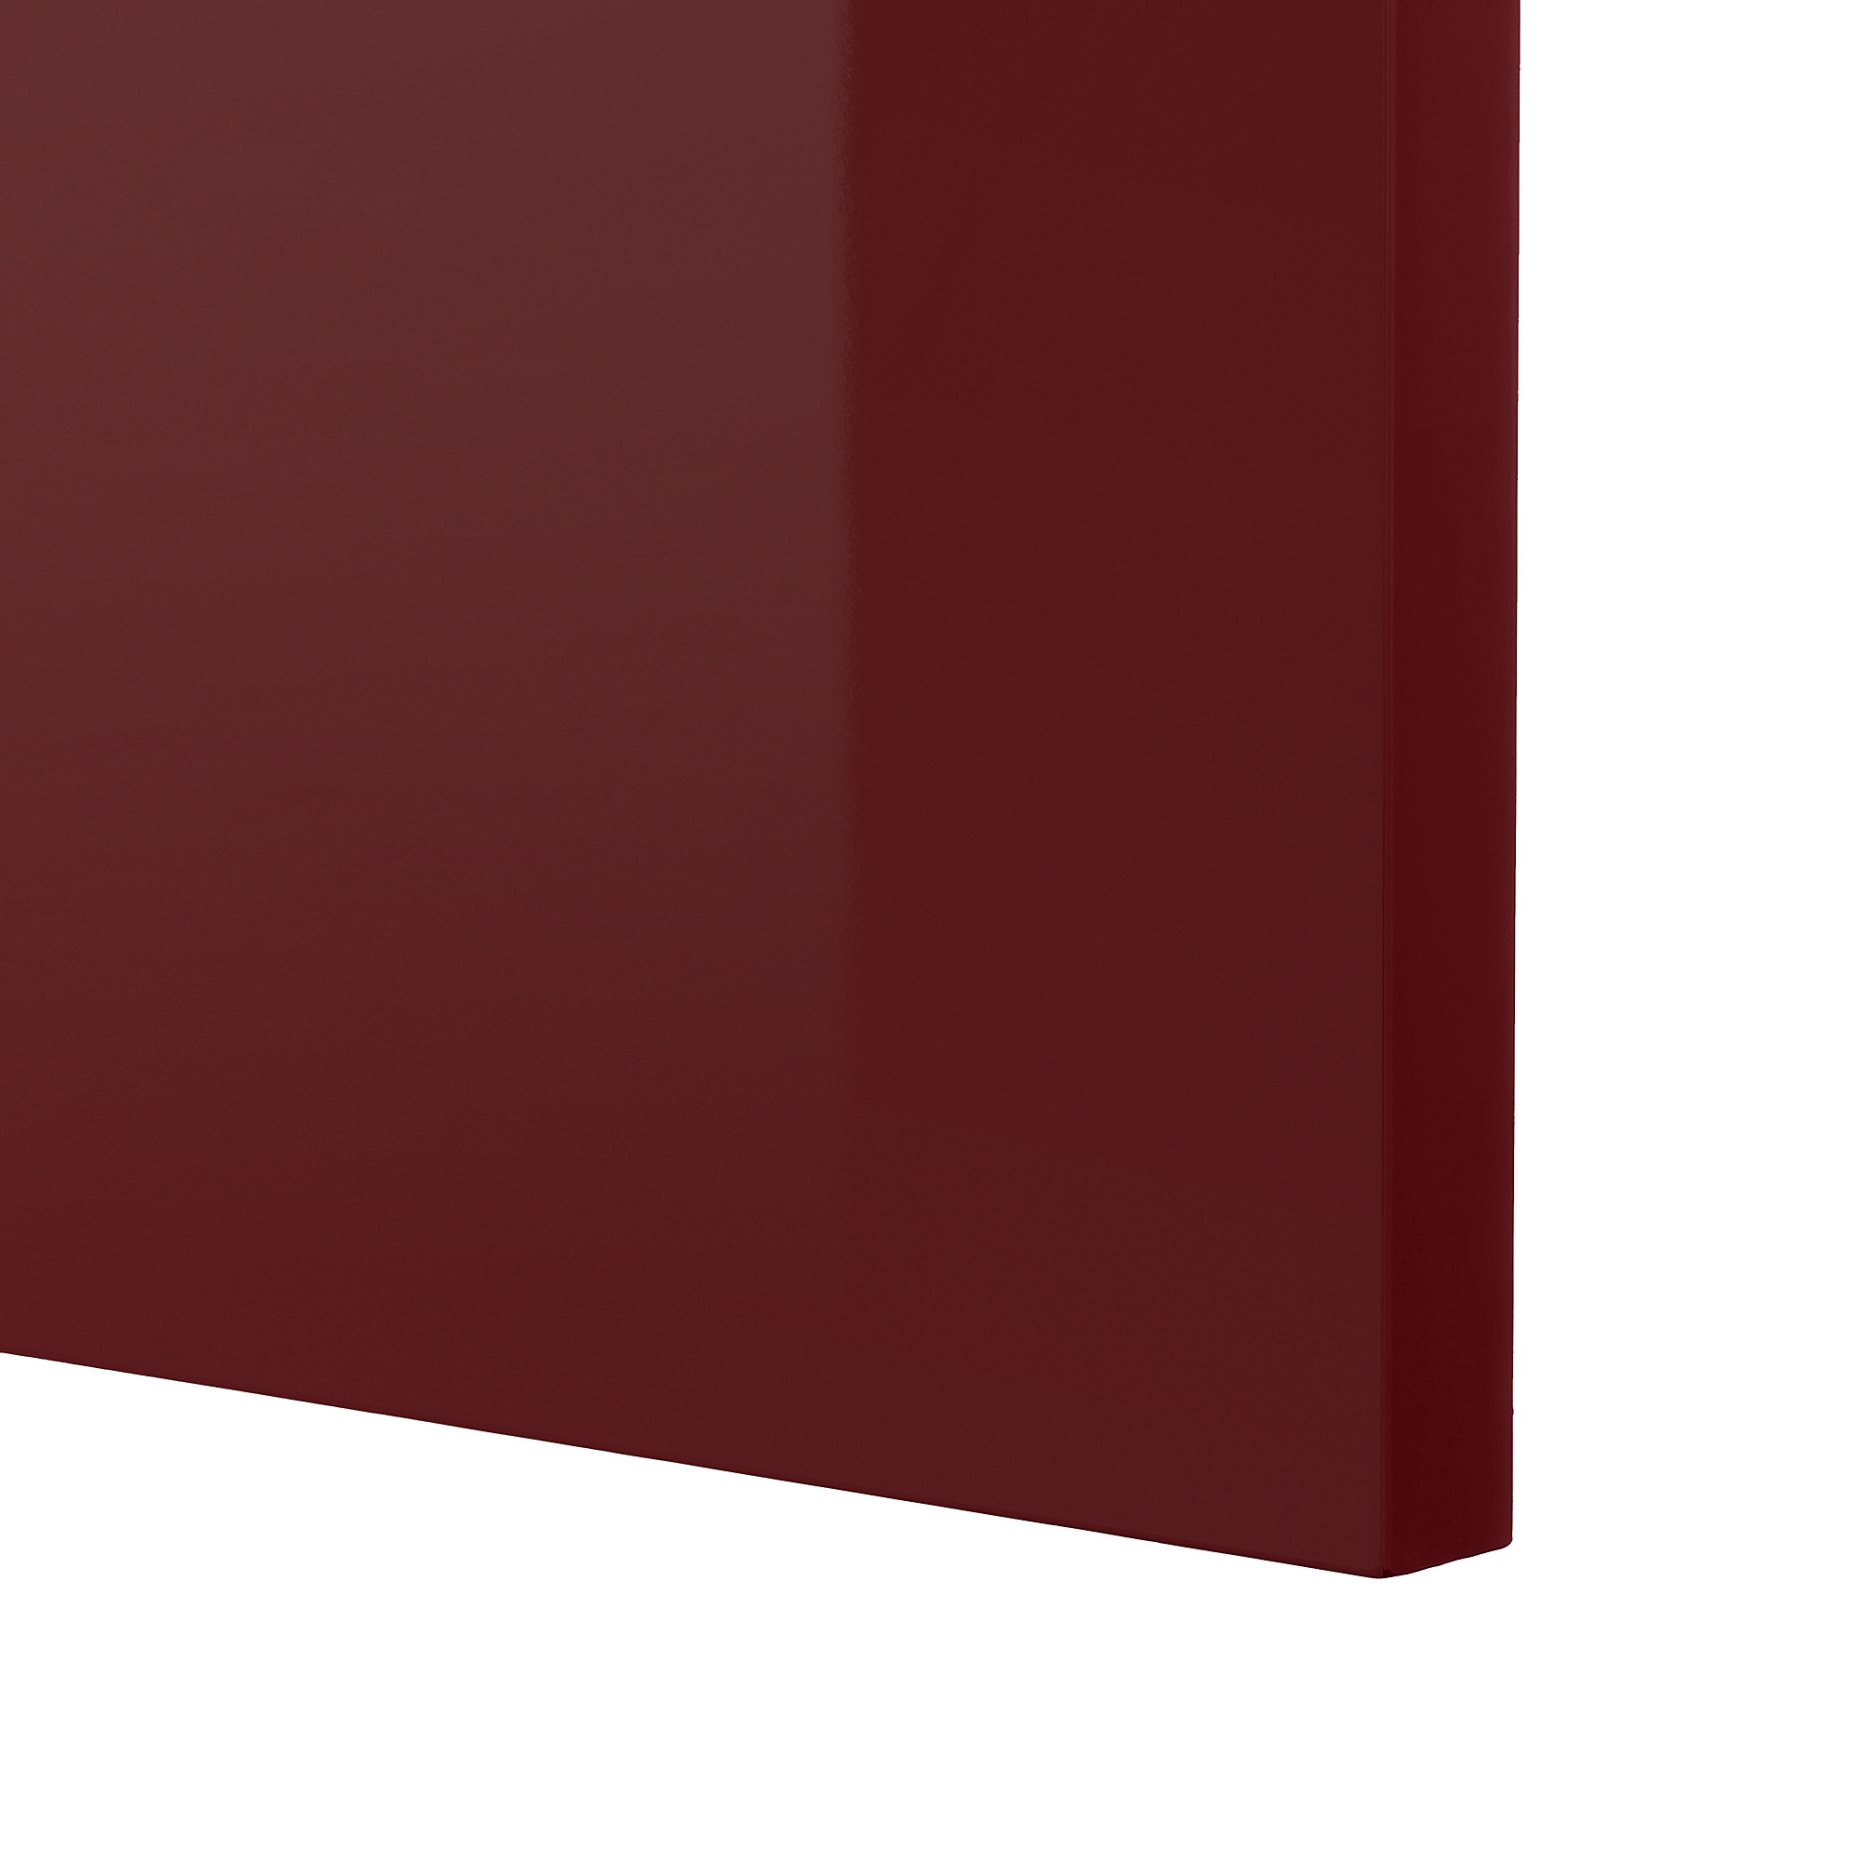 METOD, ντουλάπι βάσης με ράφια, 40x60 cm, 694.588.31